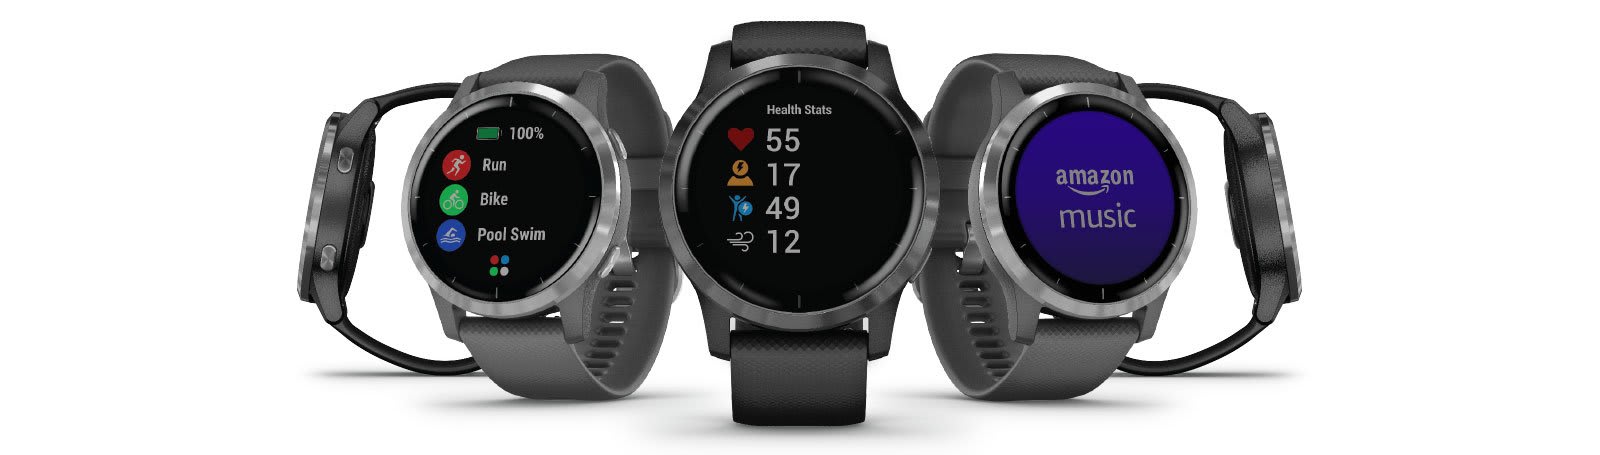 Garmin Vívoactive 4 Features Music GPS Smartwatch Body Energy Monitoring NEW 